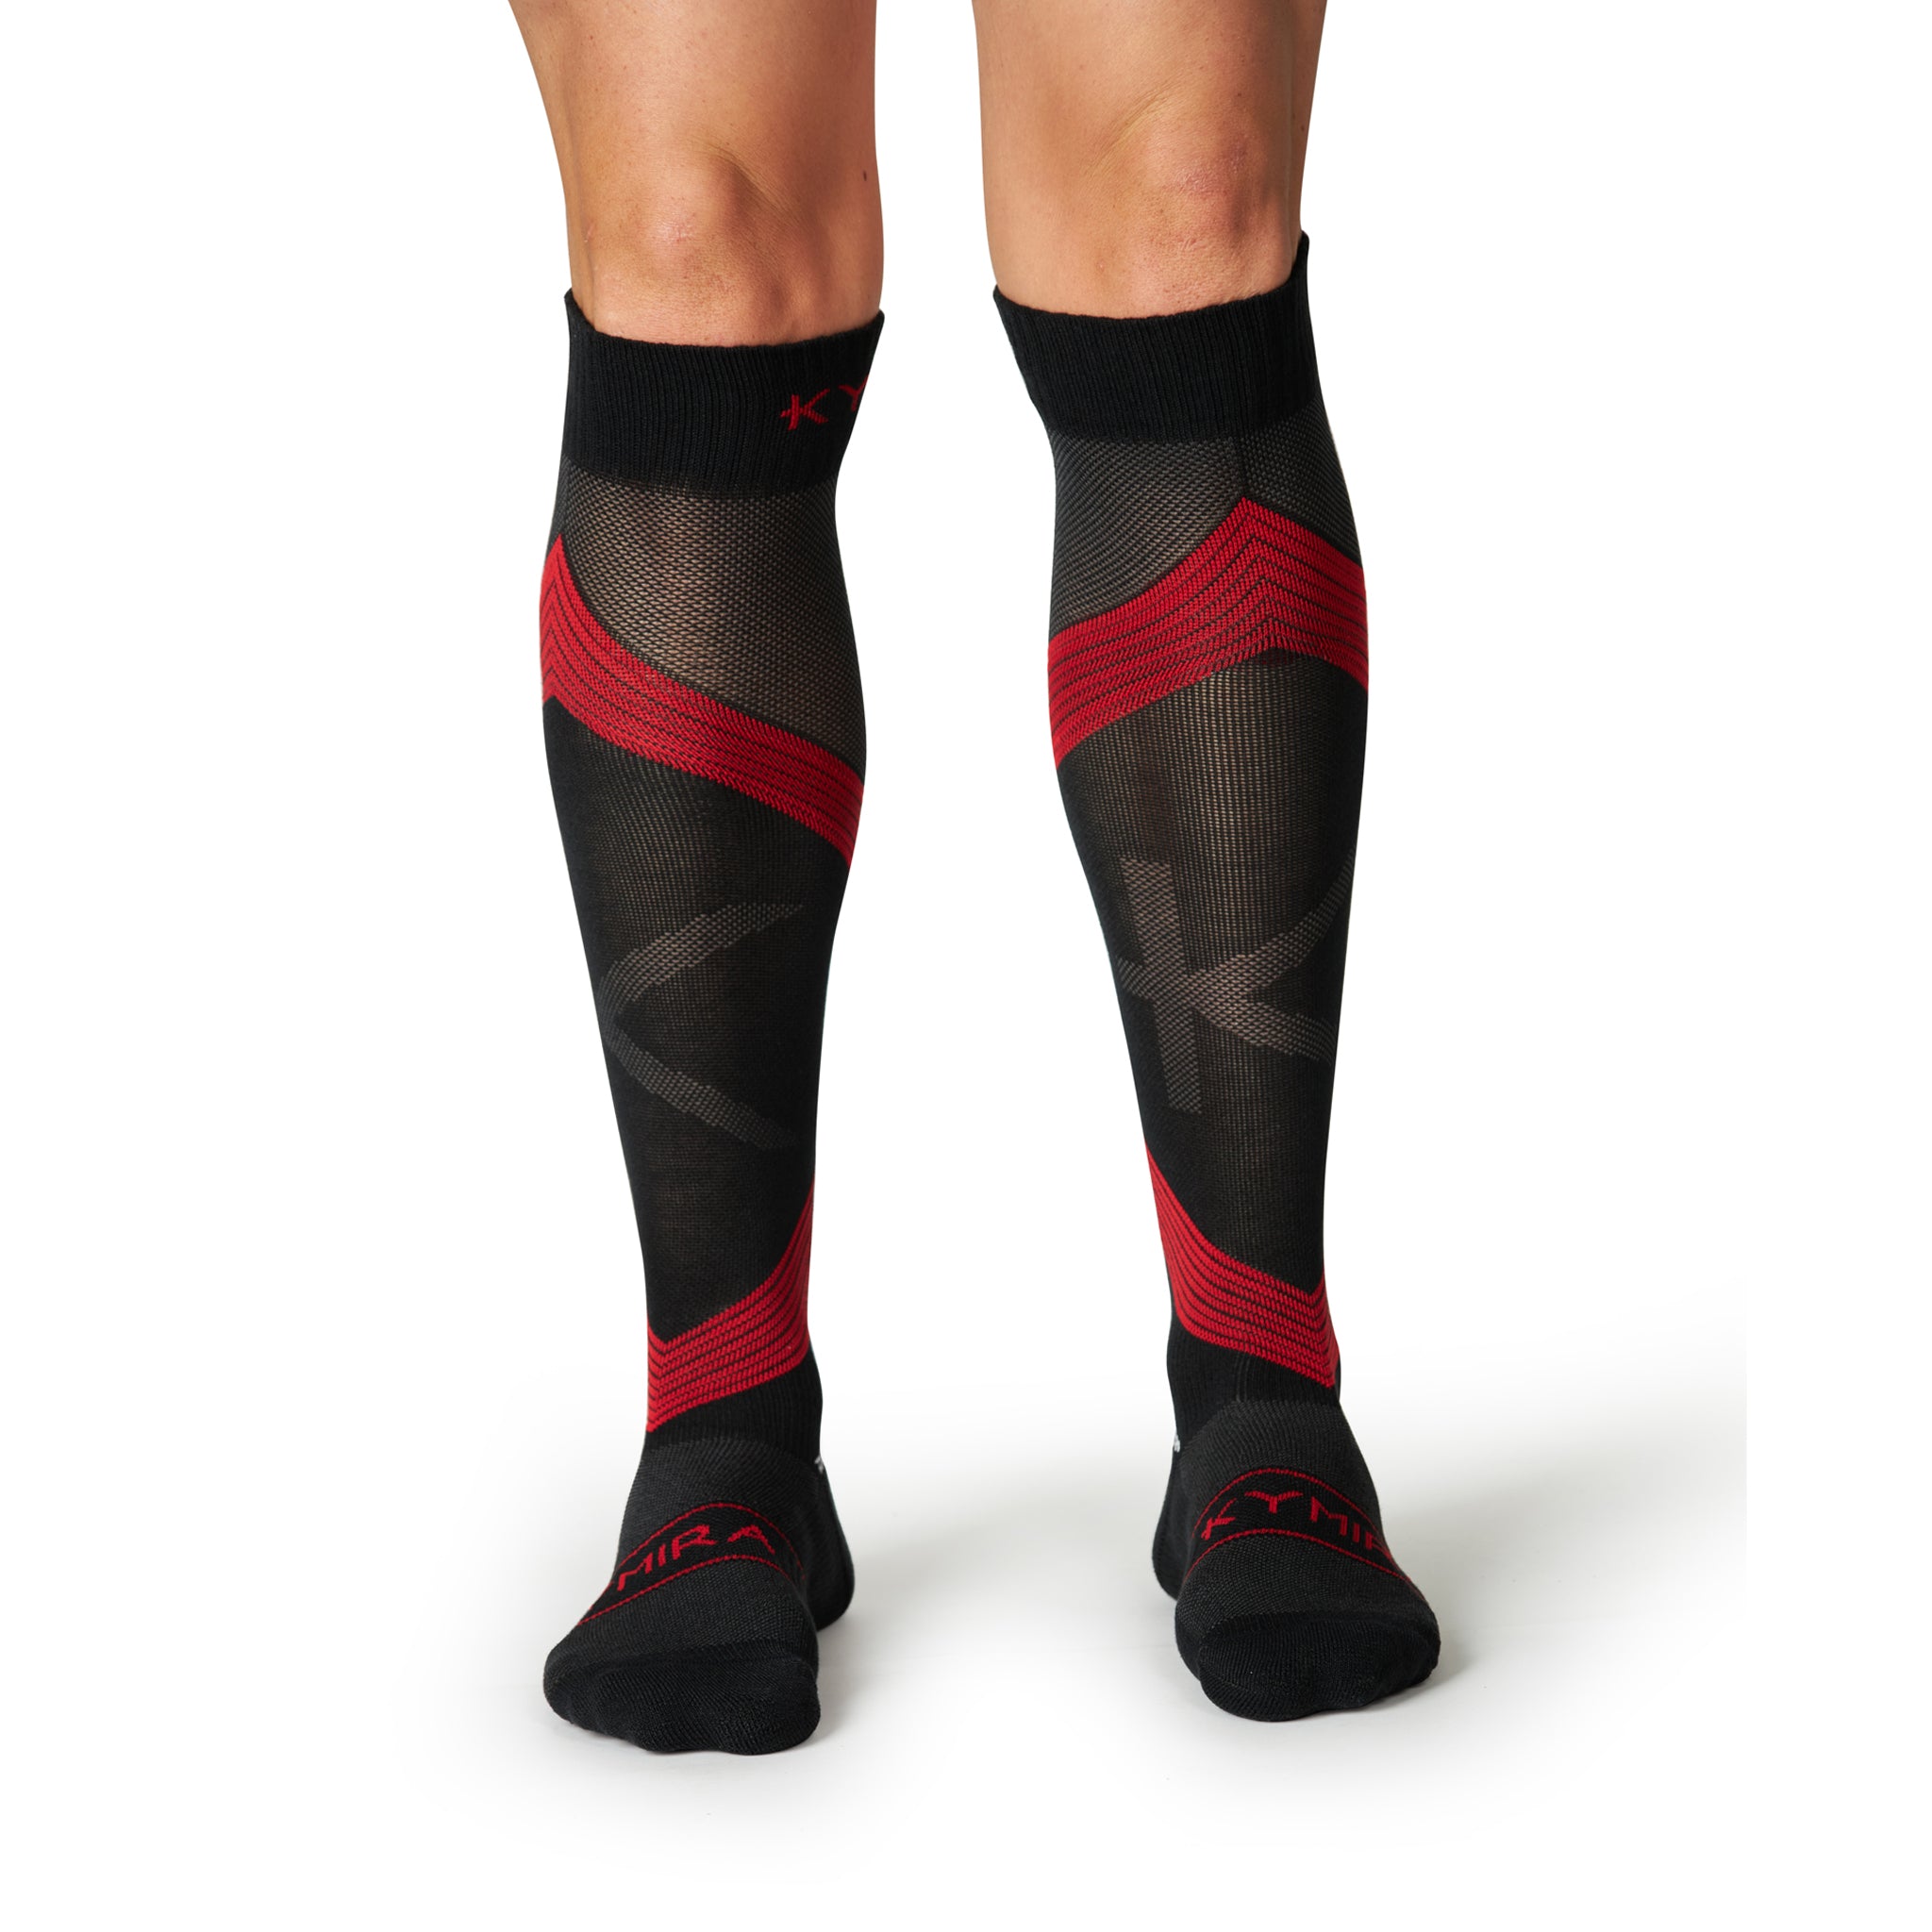 Kymira Infrared Compression Socks